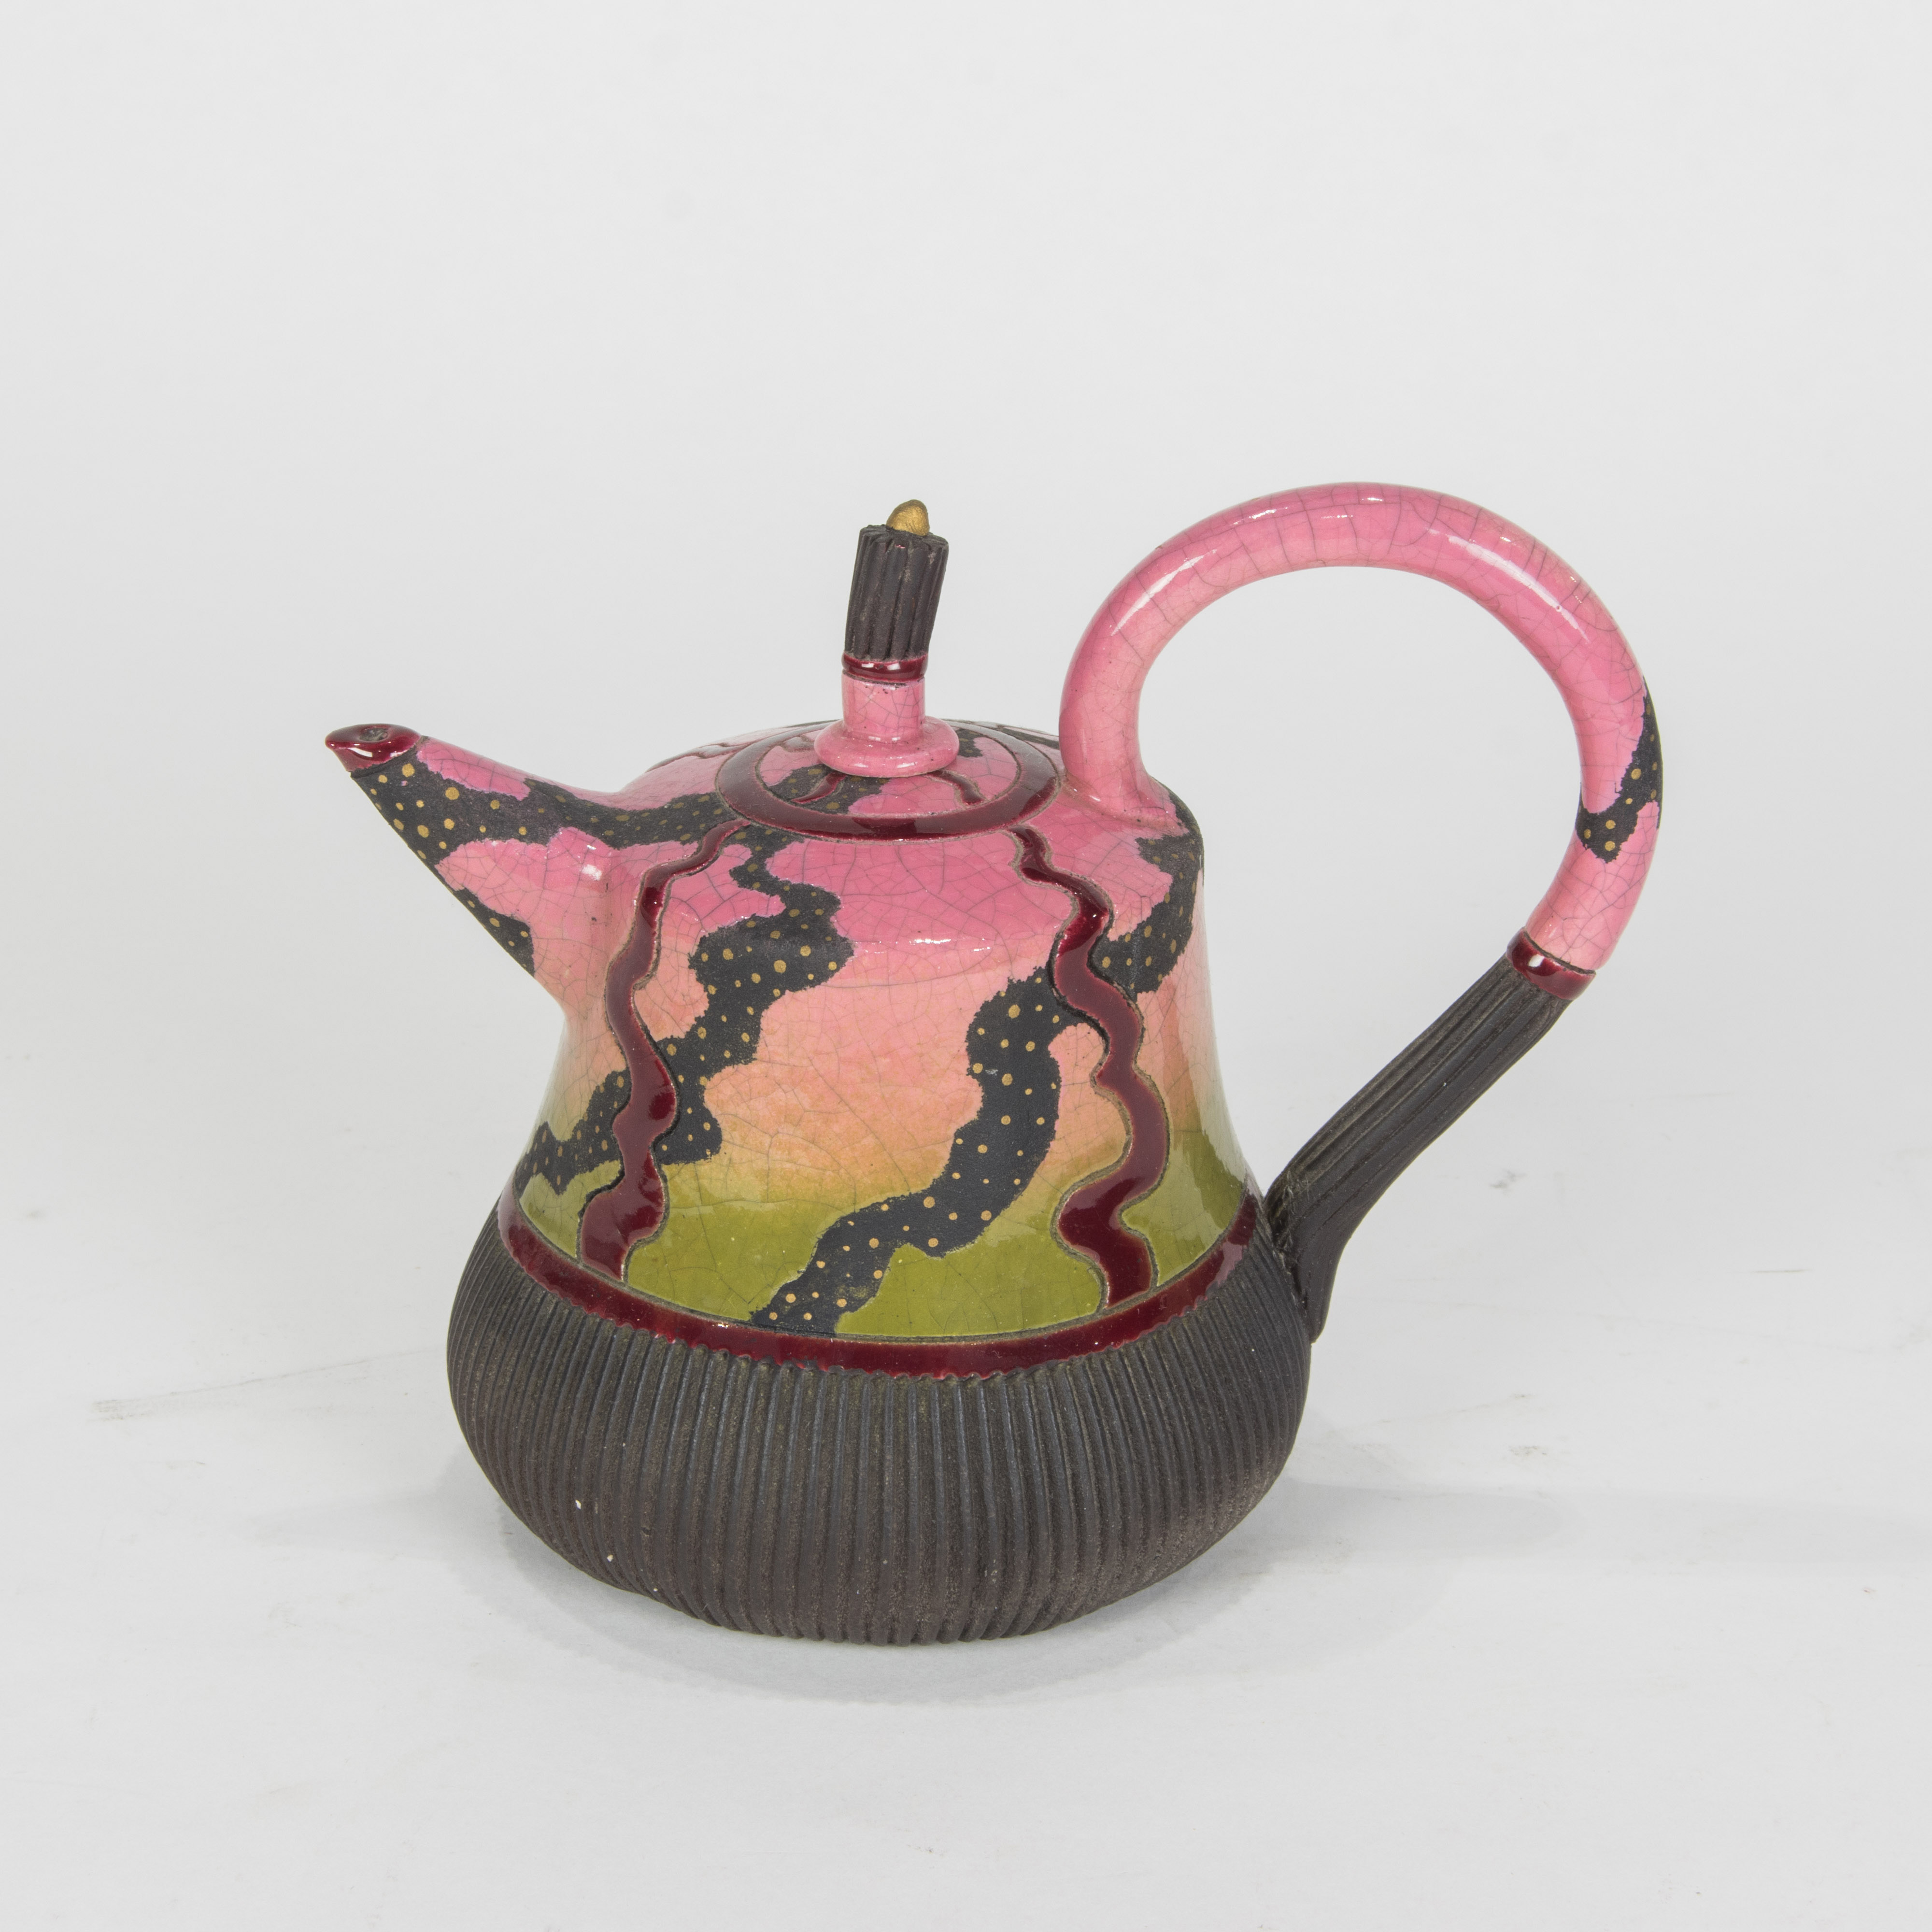 A Beverely Saito partial glazed ceramic teapot